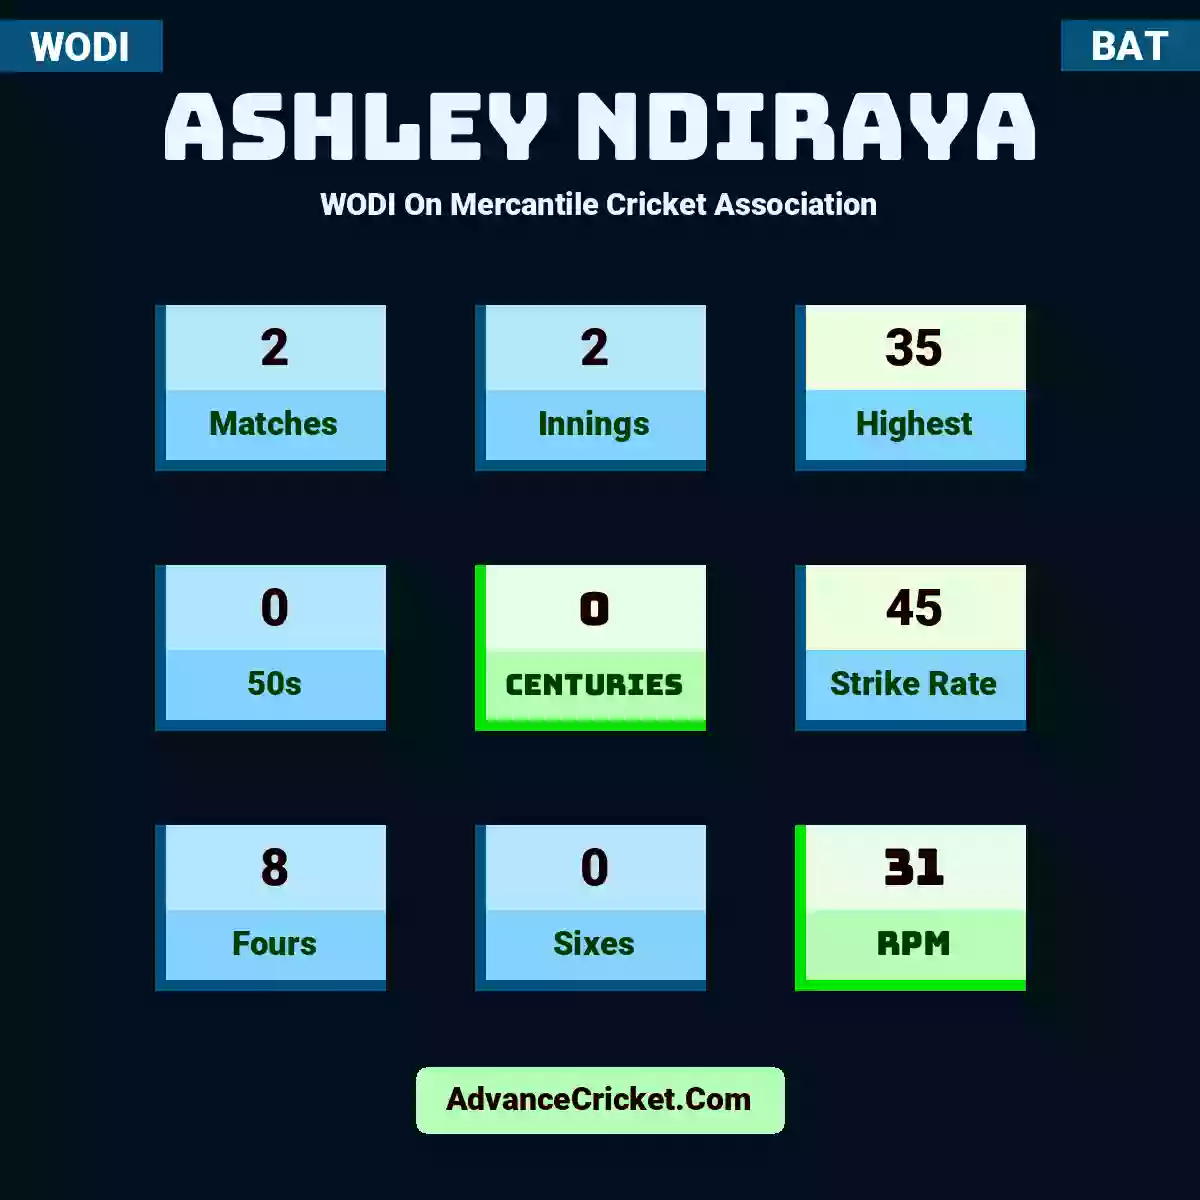 Ashley Ndiraya WODI  On Mercantile Cricket Association, Ashley Ndiraya played 2 matches, scored 35 runs as highest, 0 half-centuries, and 0 centuries, with a strike rate of 45. A.Ndiraya hit 8 fours and 0 sixes, with an RPM of 31.